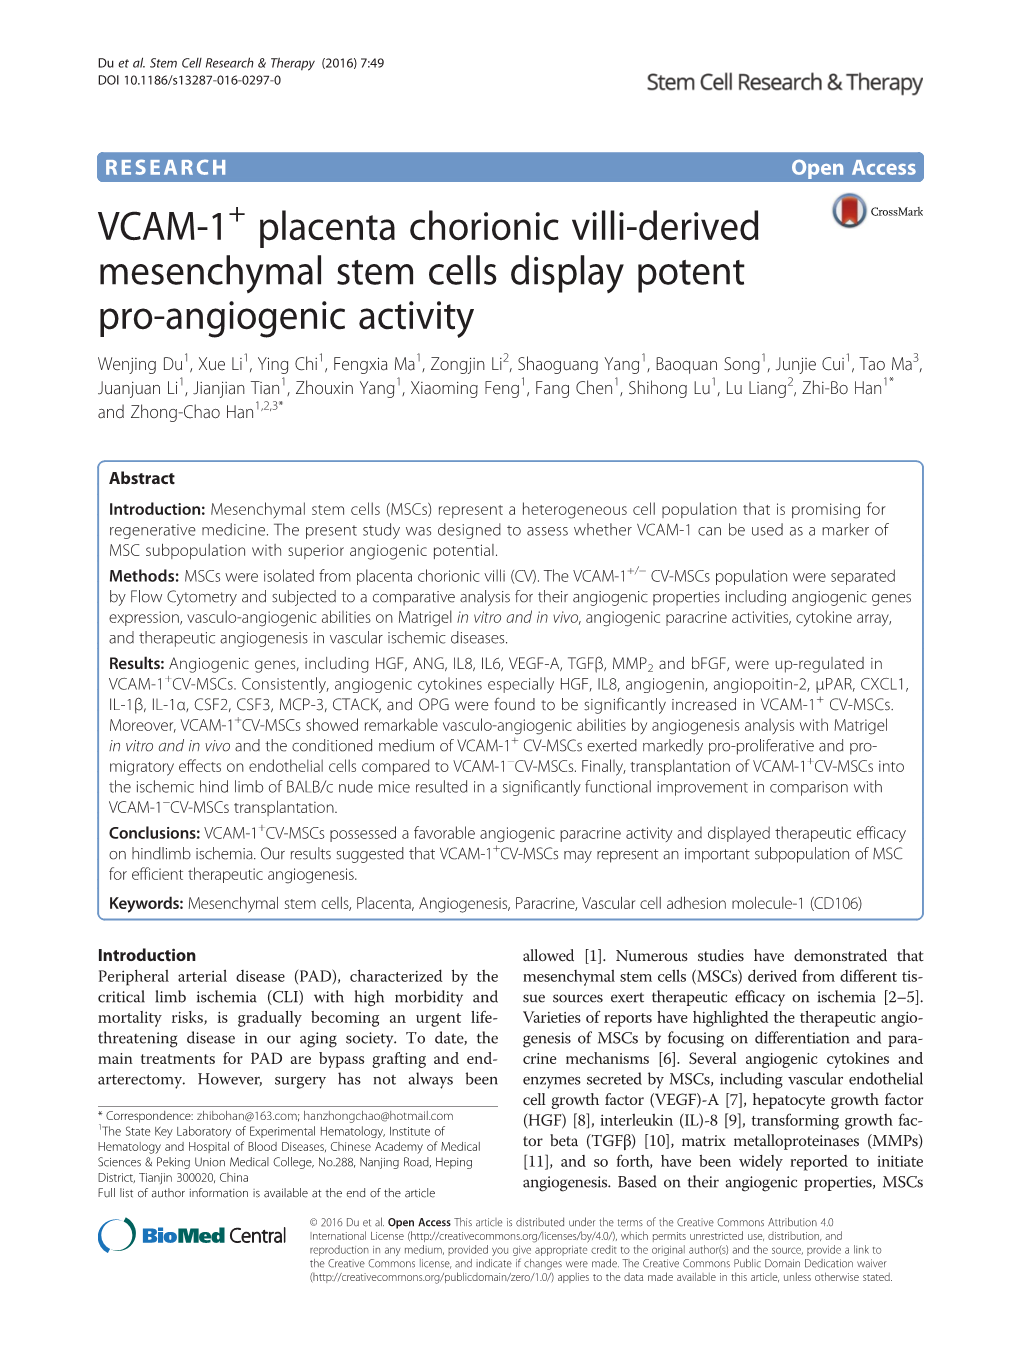 VCAM-1+ Placenta Chorionic Villi-Derived Mesenchymal Stem